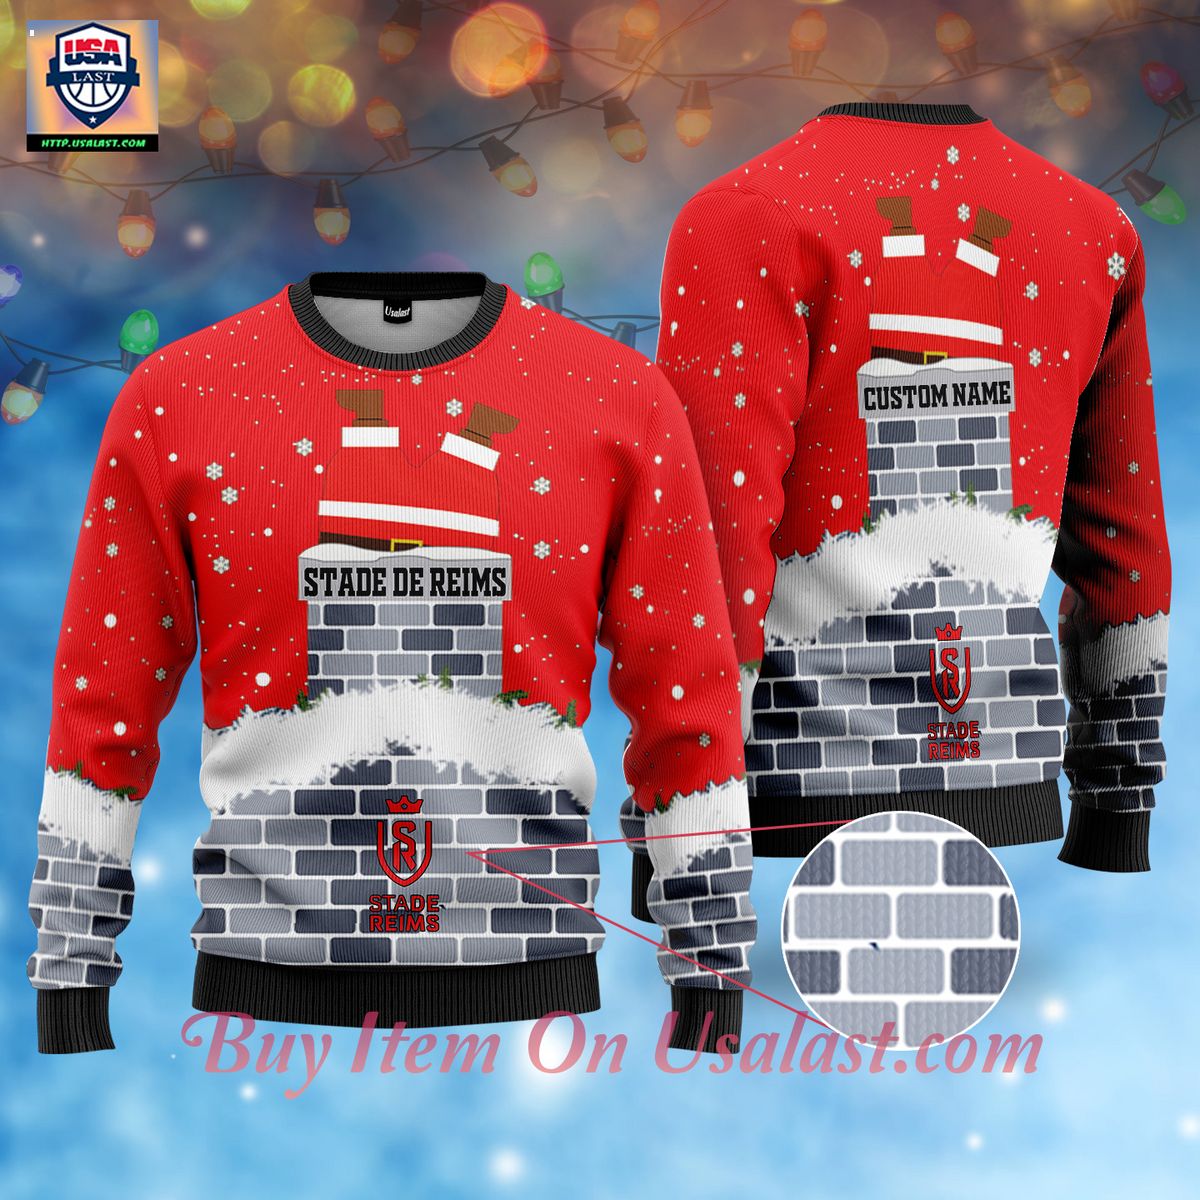 stade-de-reims-santa-claus-custom-name-ugly-christmas-sweater-1-EkFND.jpg